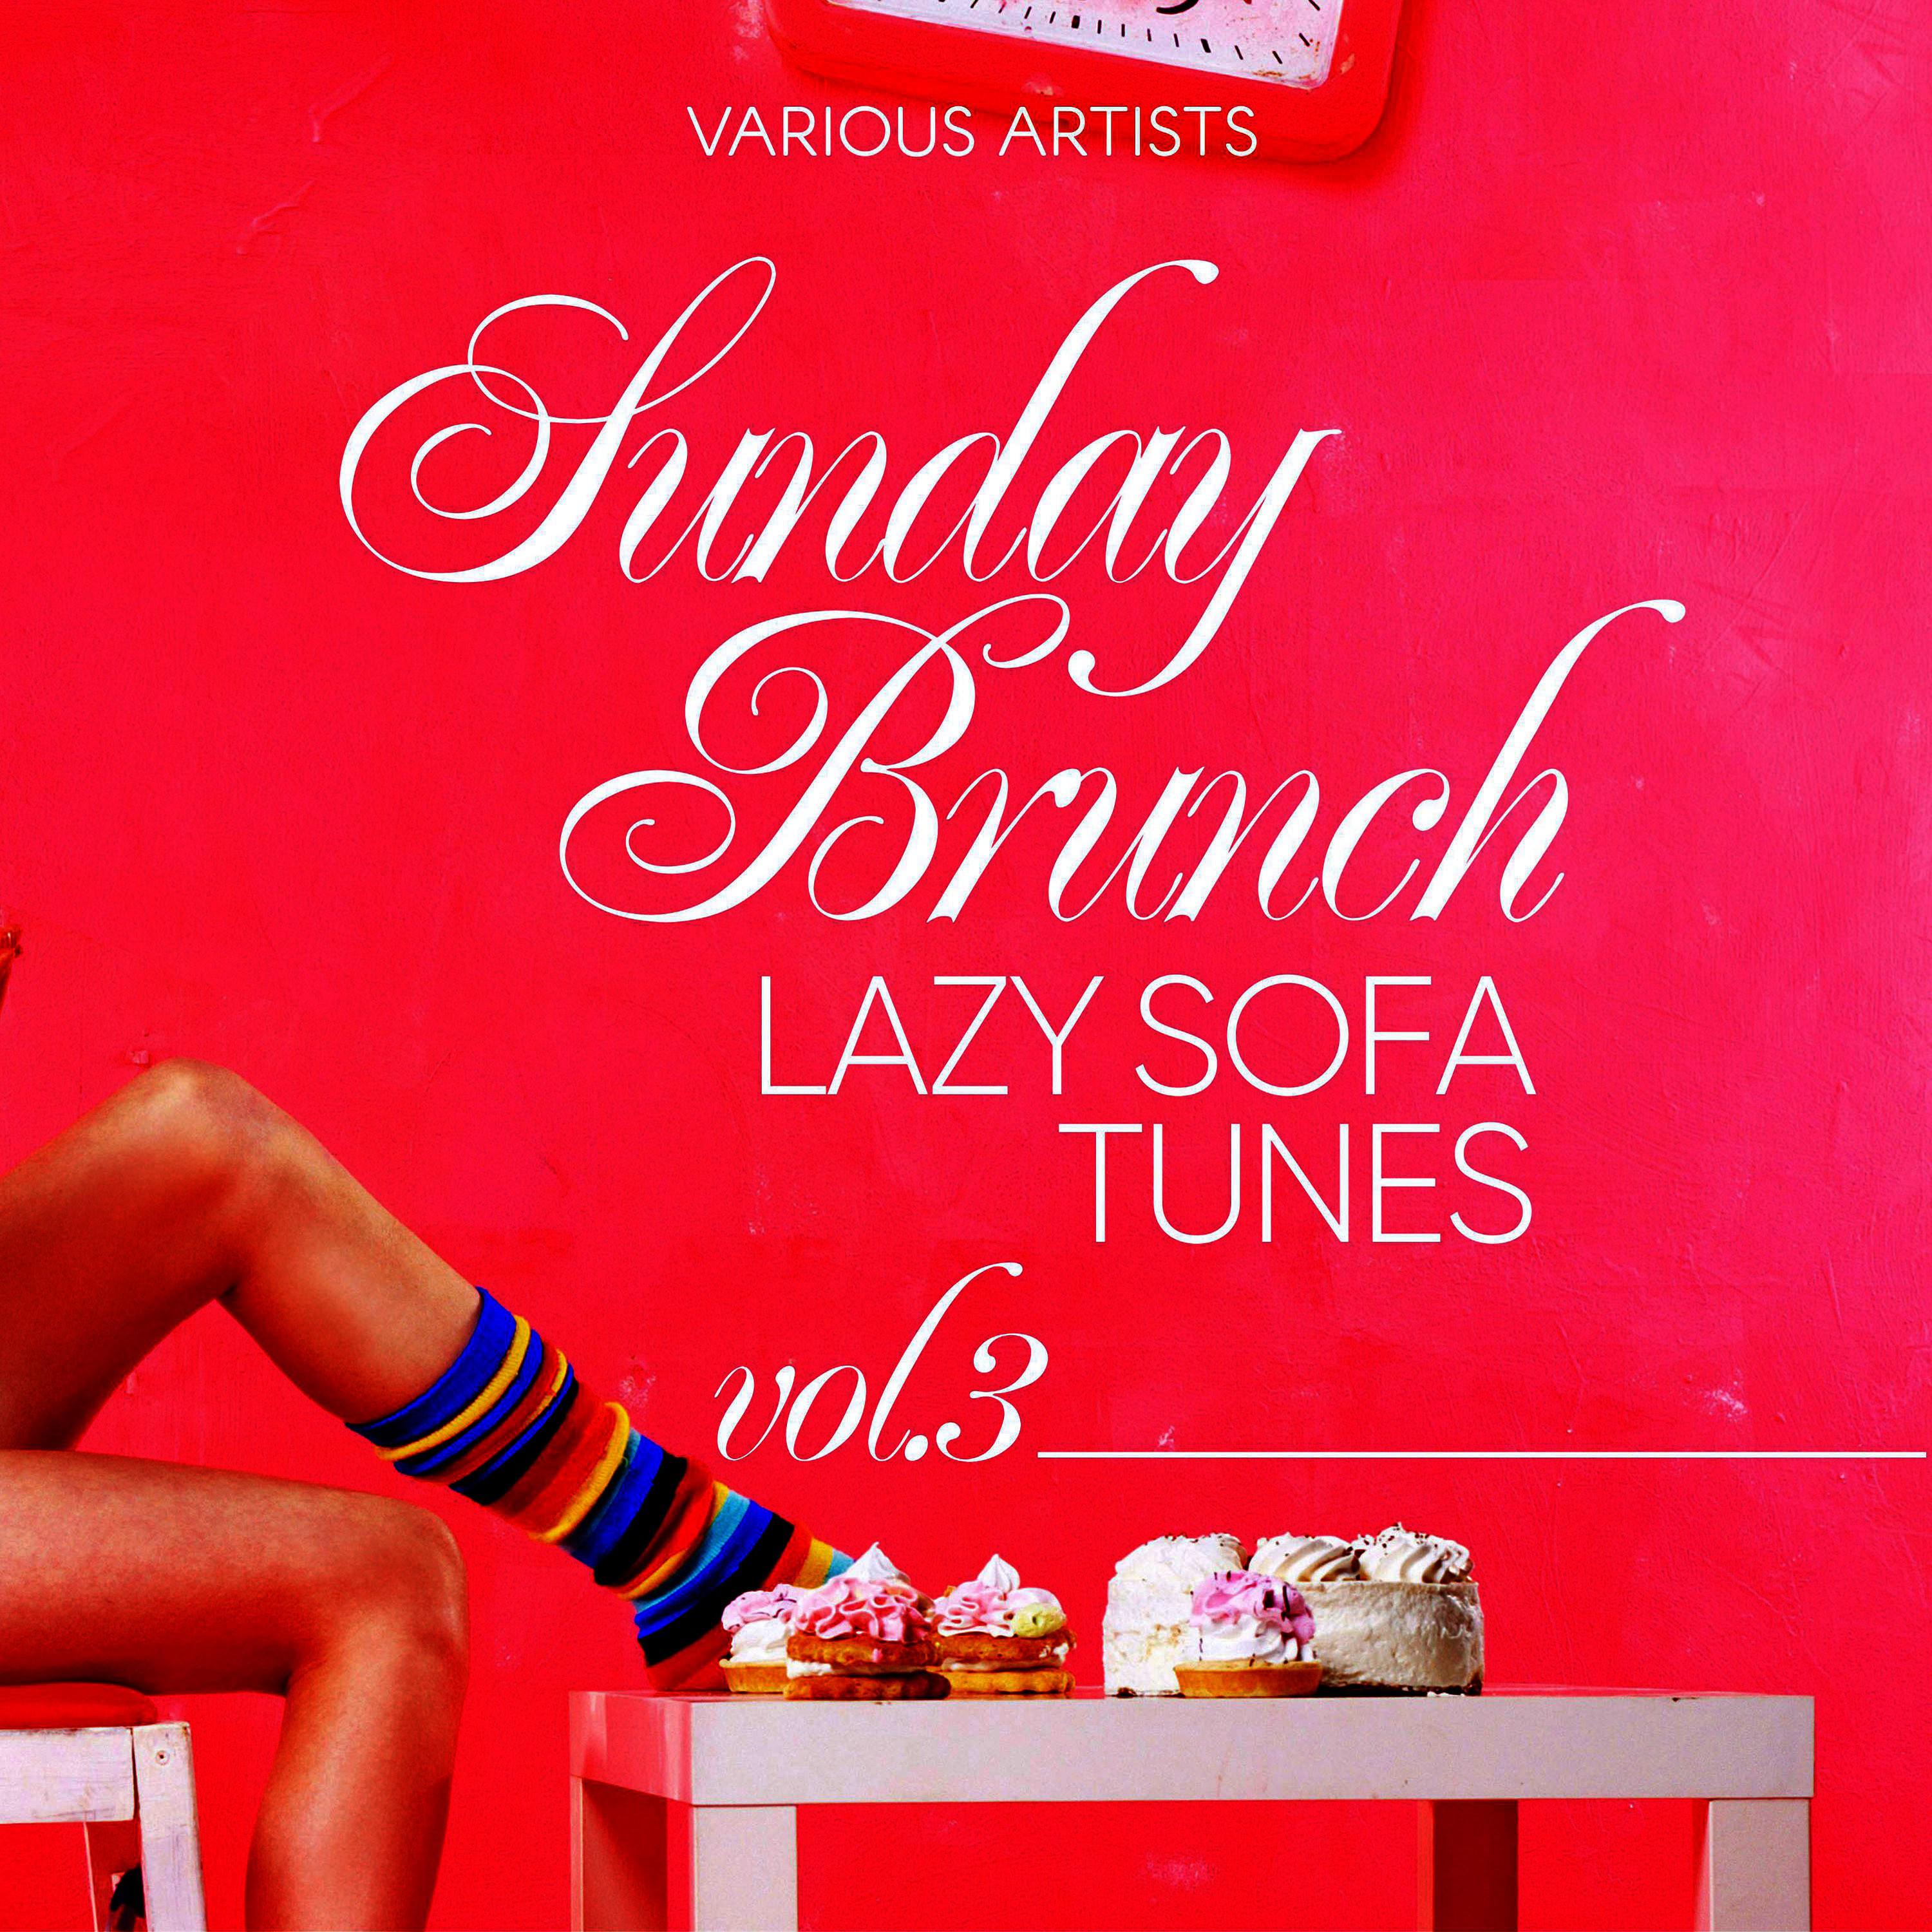 Sunday Brunch (Lazy Sofa Tunes), Vol. 3